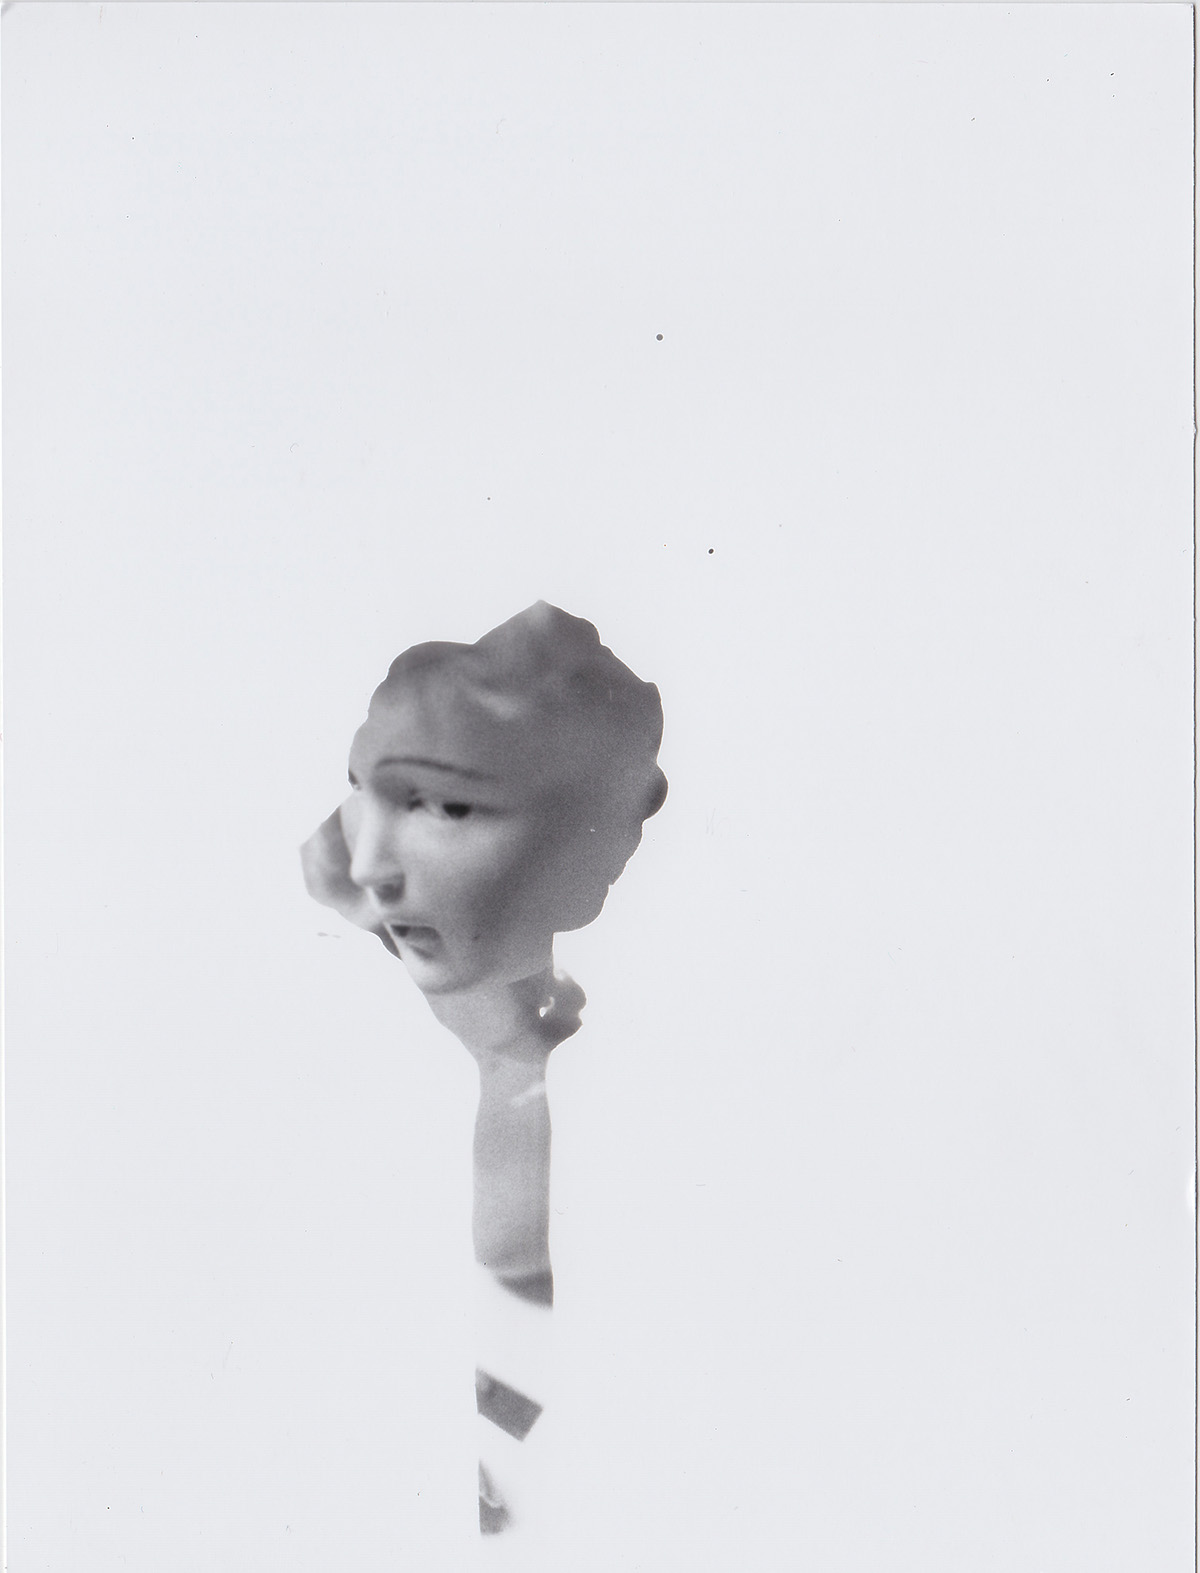 Fotografia analogica poemas prosa Boneca doll black and white b&w preto e branco p&b Nikon fm2